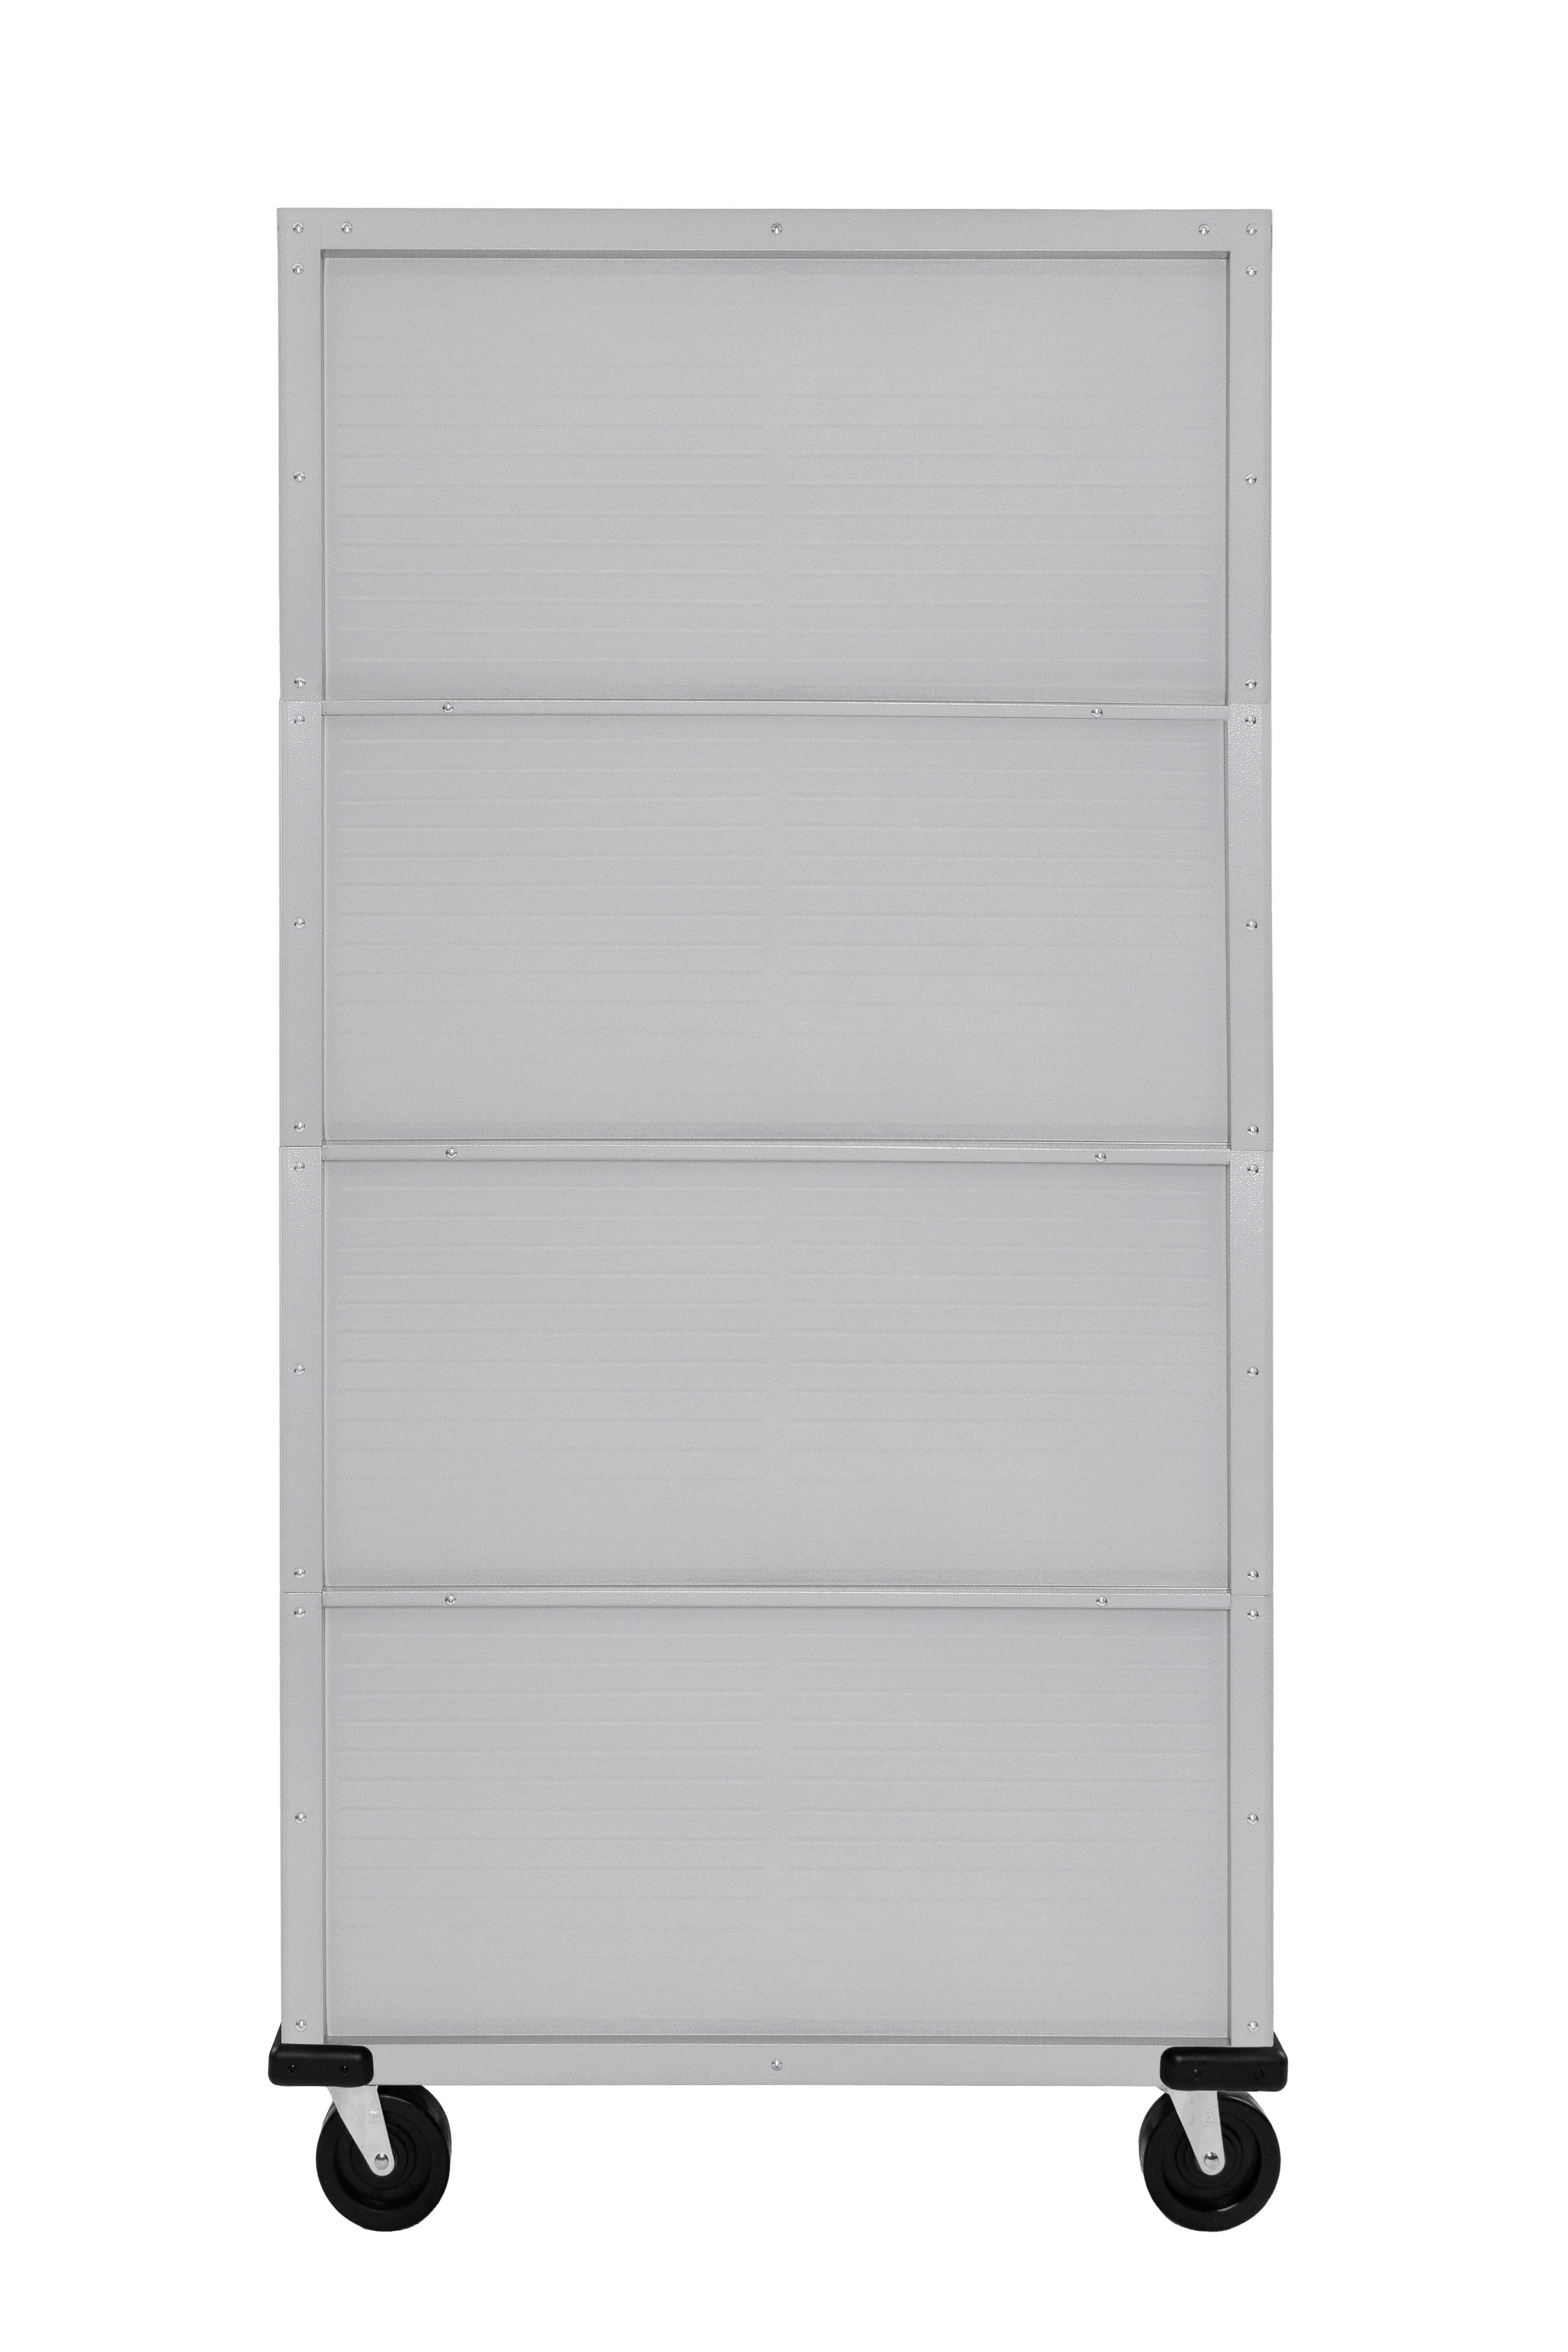 Seville Classics UltraHD Steel Body Lockable Storage Filing Cabinet Organizer Locker Shelving Unit 36" W x 18" D x 72" H, Granite Gray - image 5 of 12